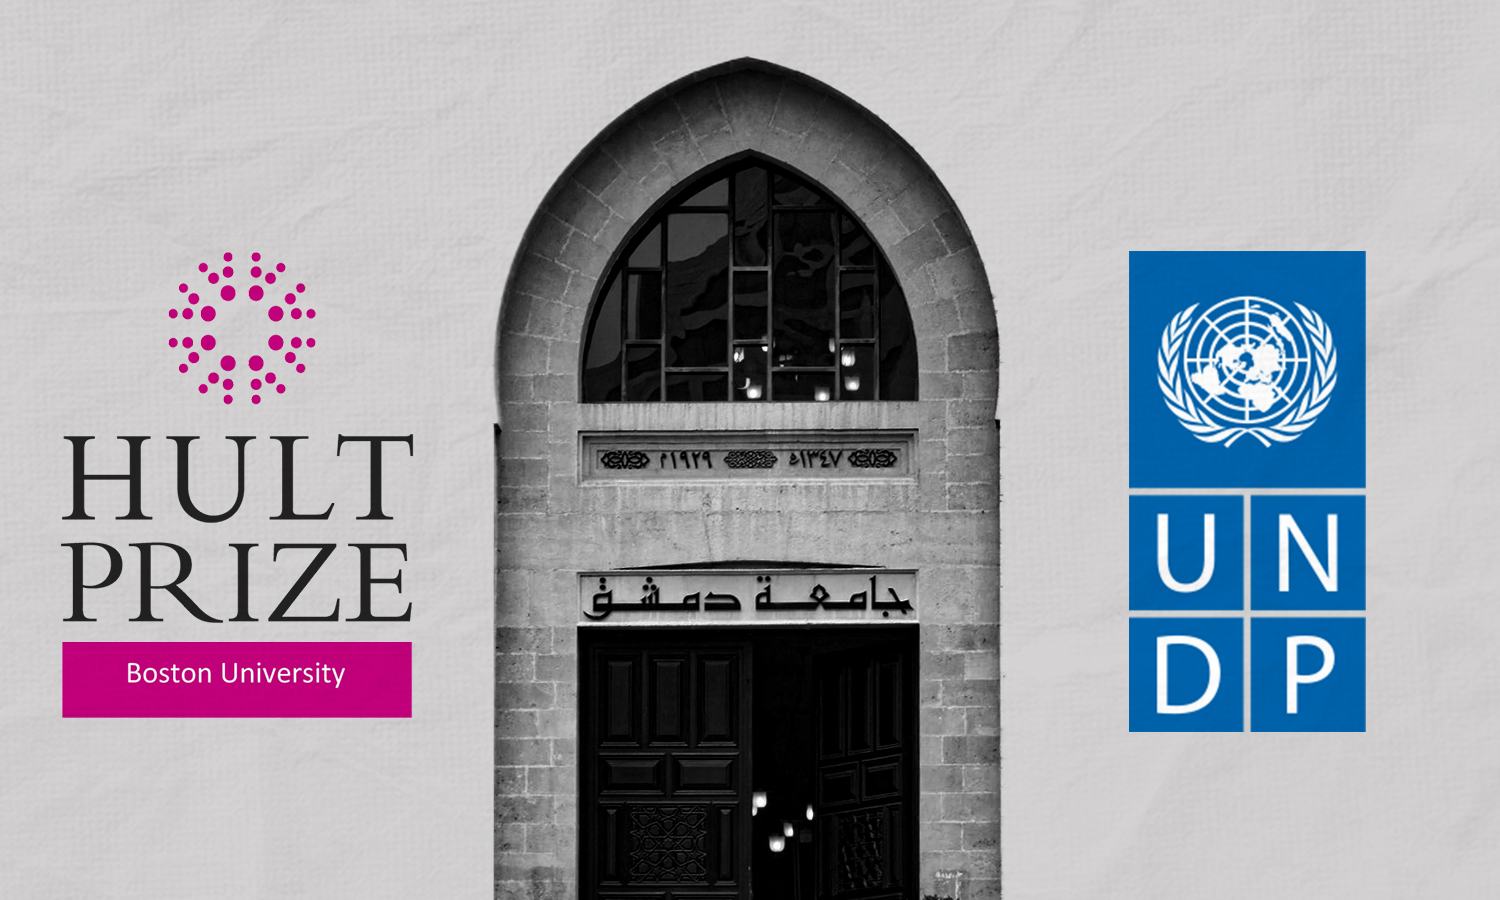 Damascus University, Hult Prize, the United Nations Development Programme (UNDP) - July 2021 (edited by Enab Baladi )